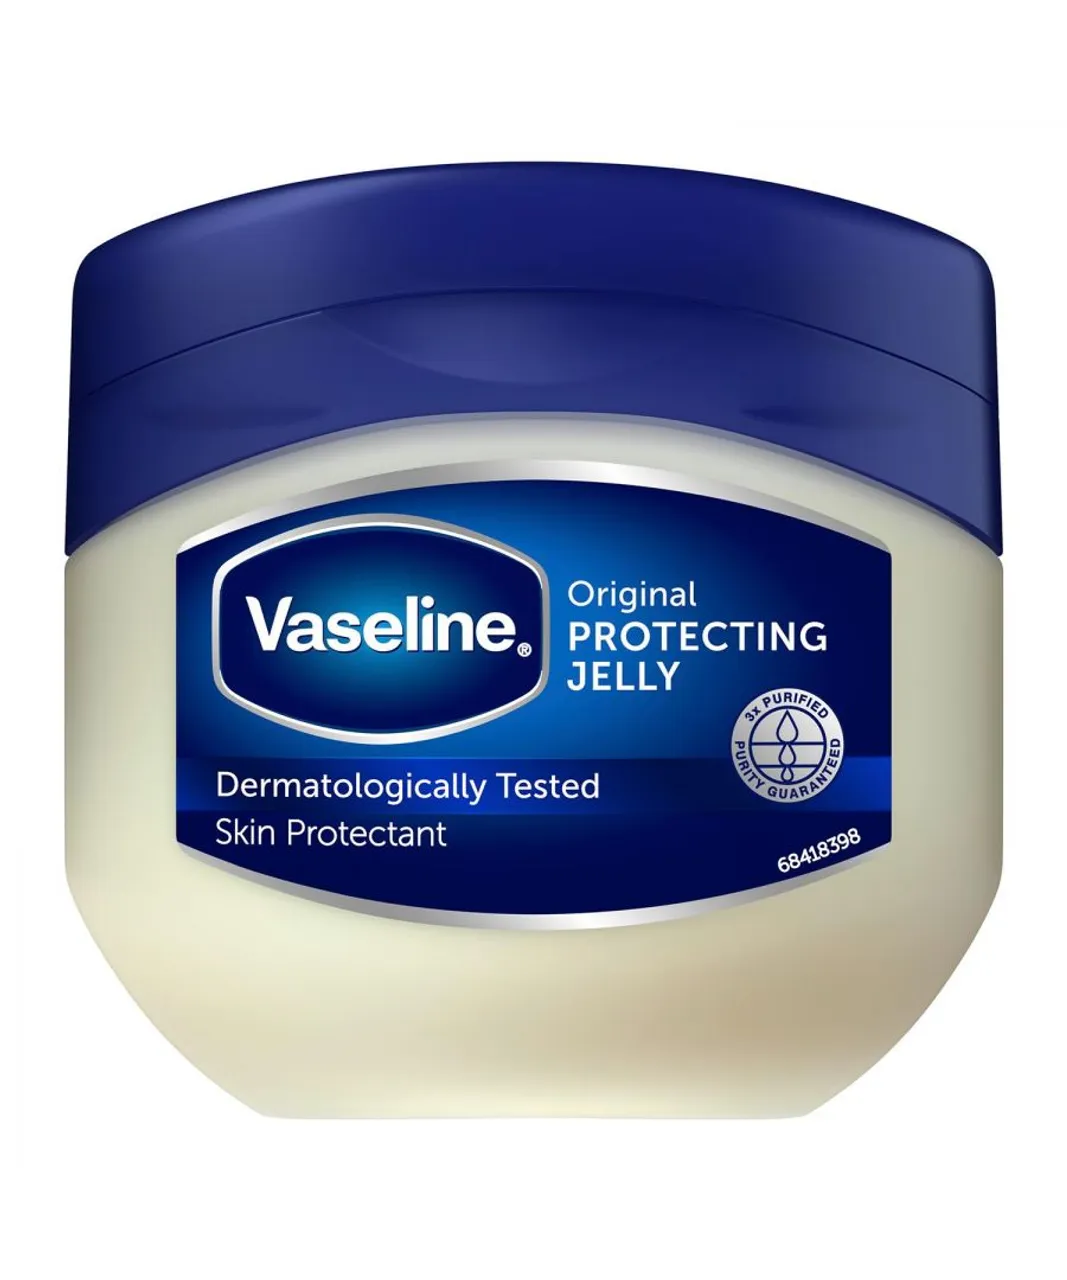 Vaseline Unisex Original Skin Protectant Petroleum Jelly for Al Type, 6Pack of 100ml - Cream - One Size